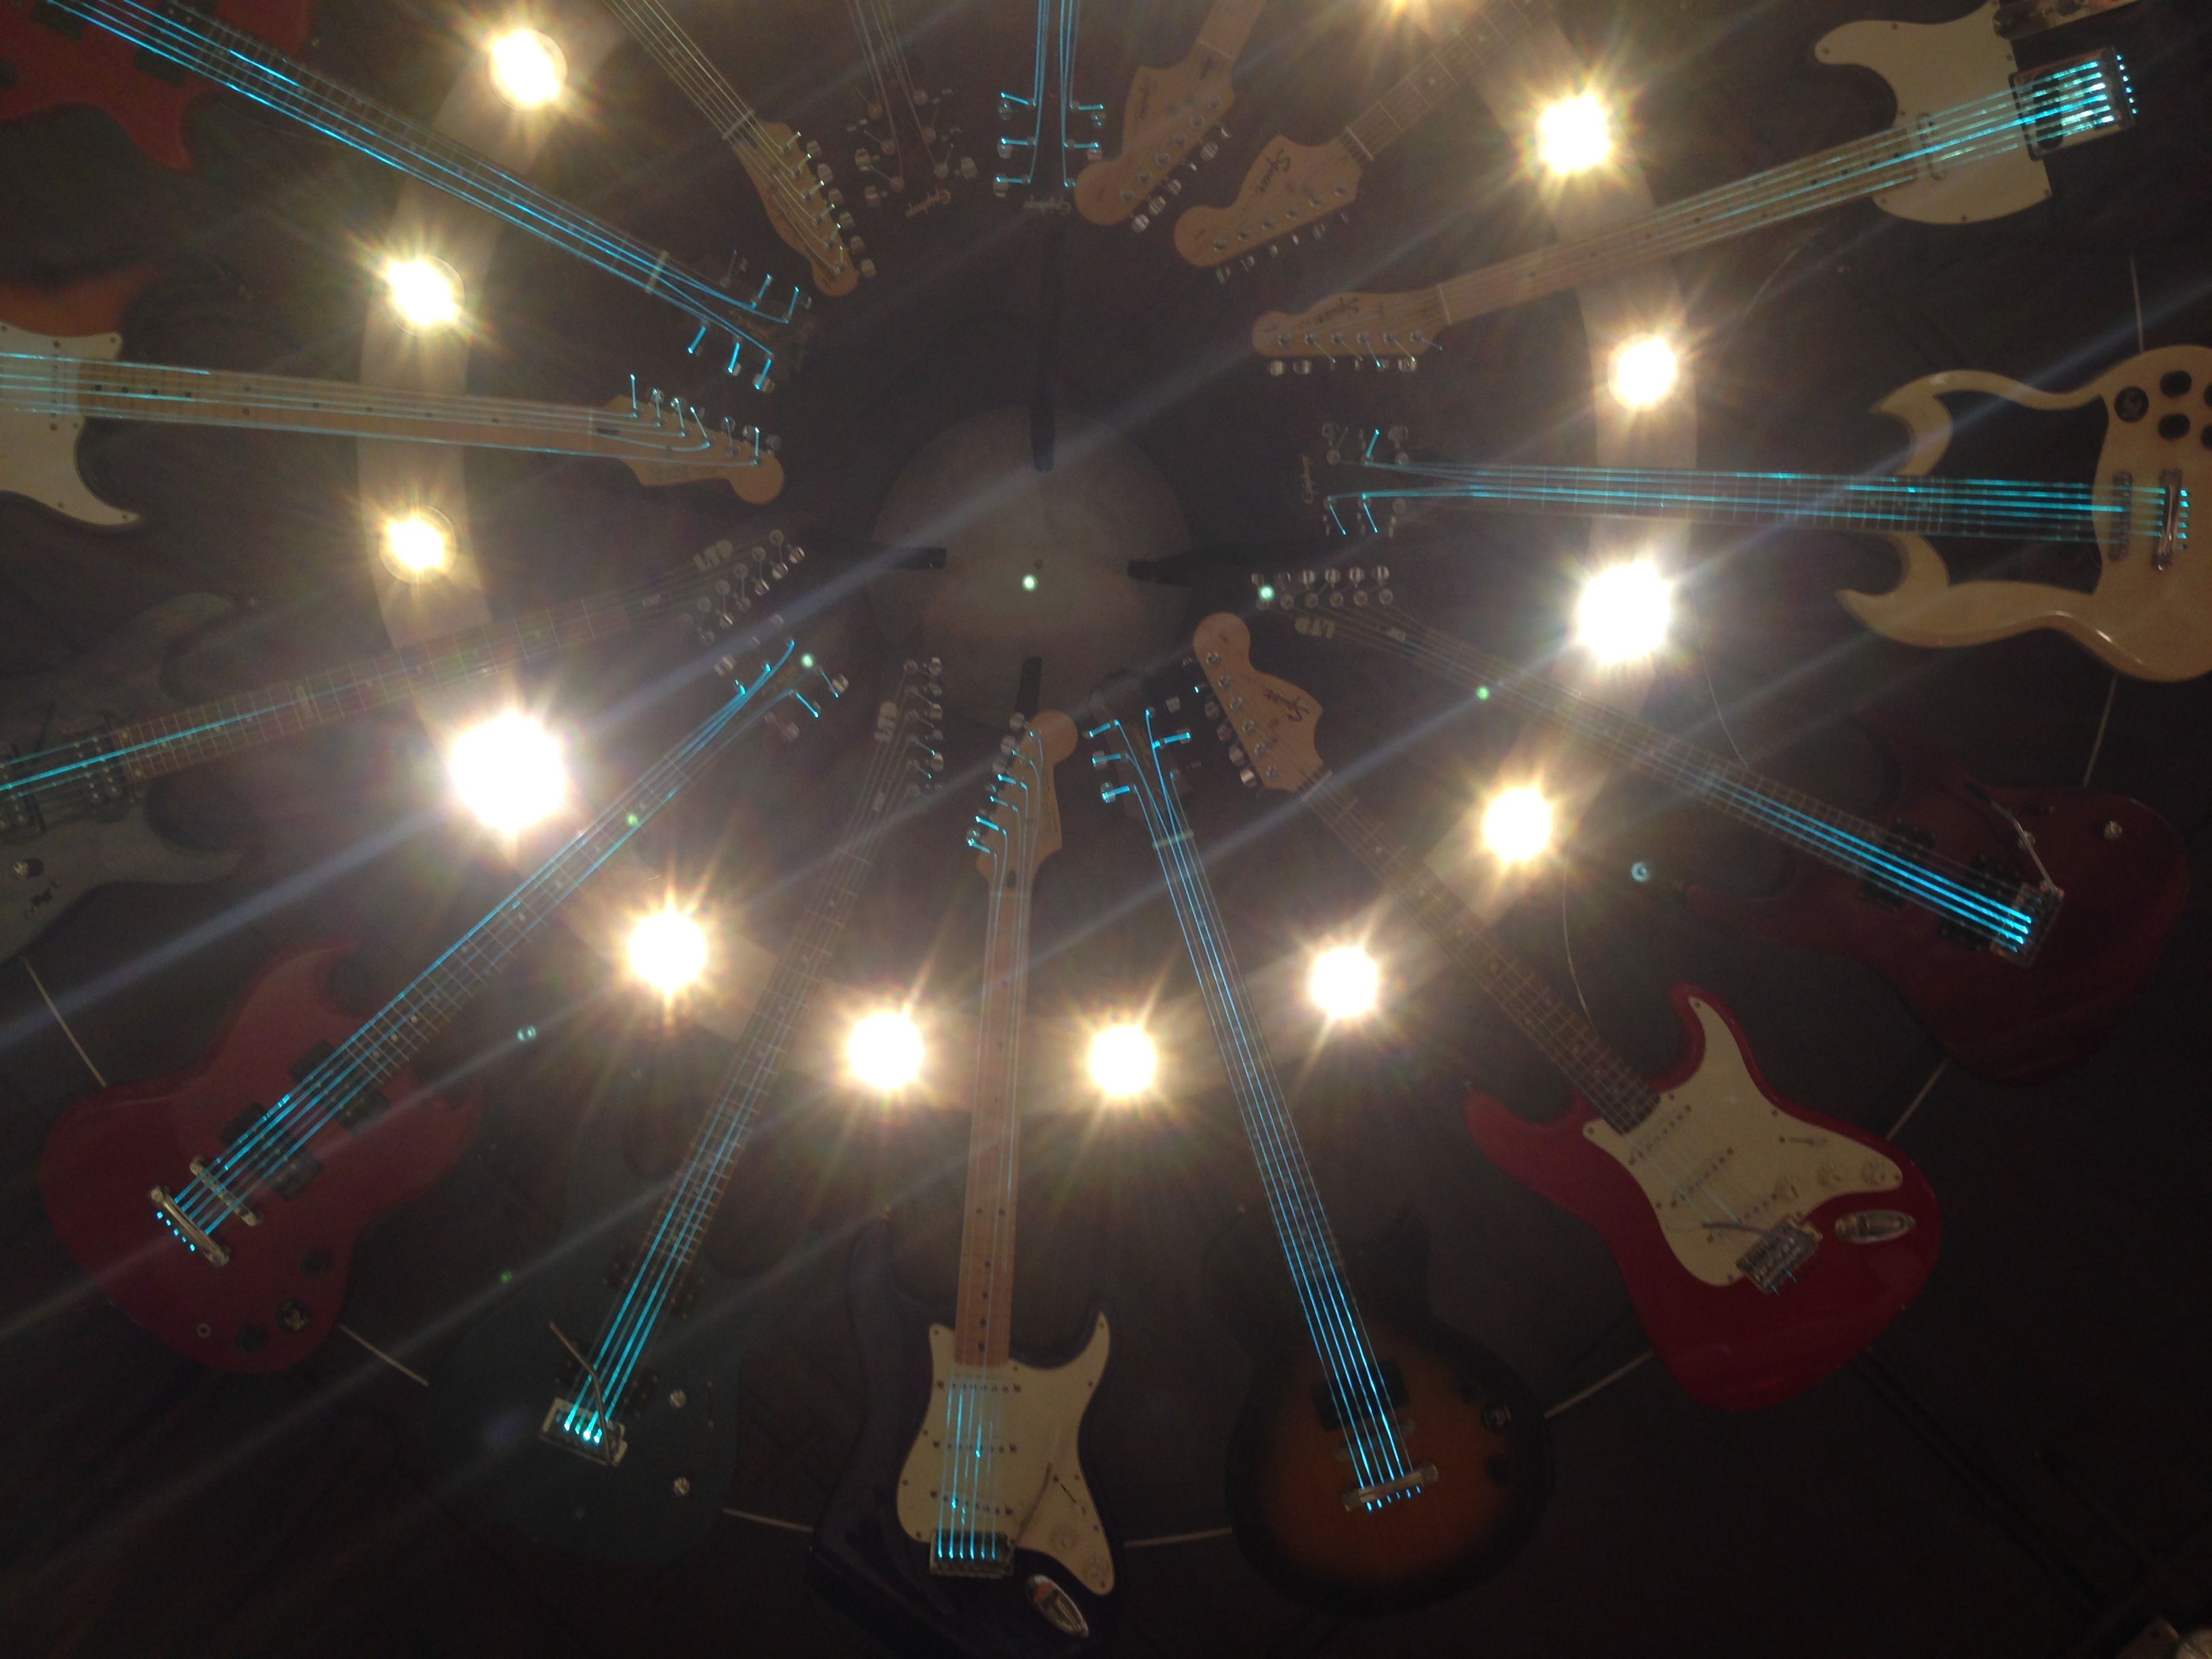 Fender Guitar Chandelier Hard Rock Hotel - Universal Studios Orlando ...